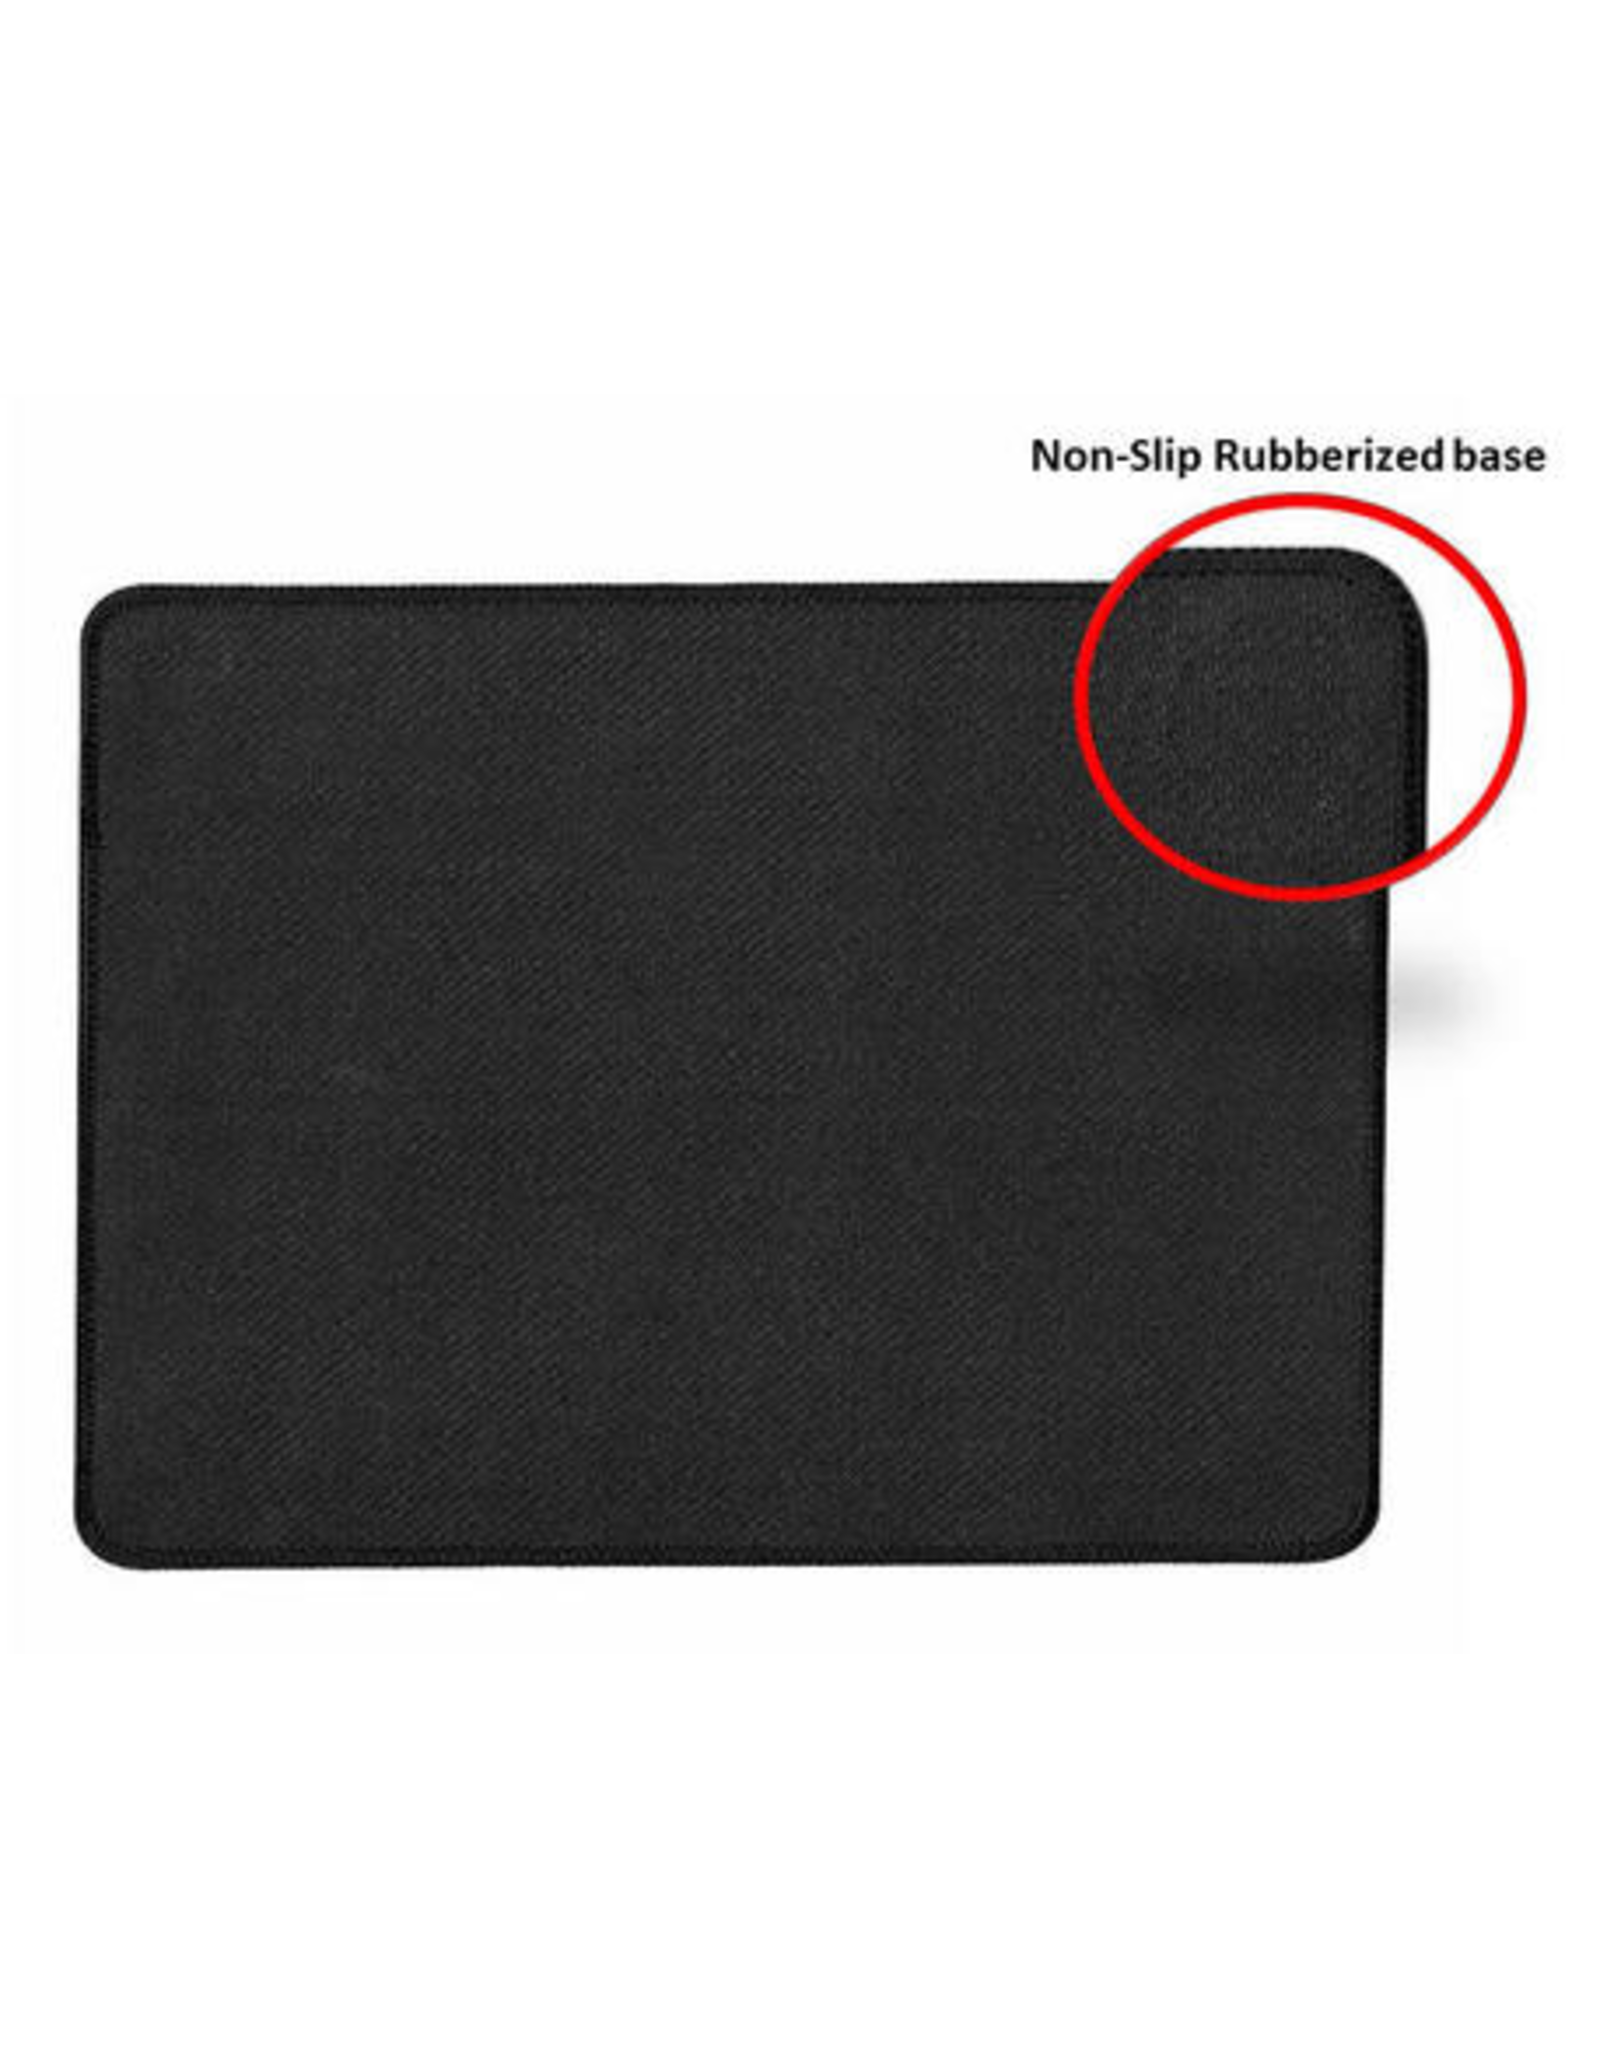 Moustache Mouse Pad Non-Slip Anti-Fray Cloth Surface, Black